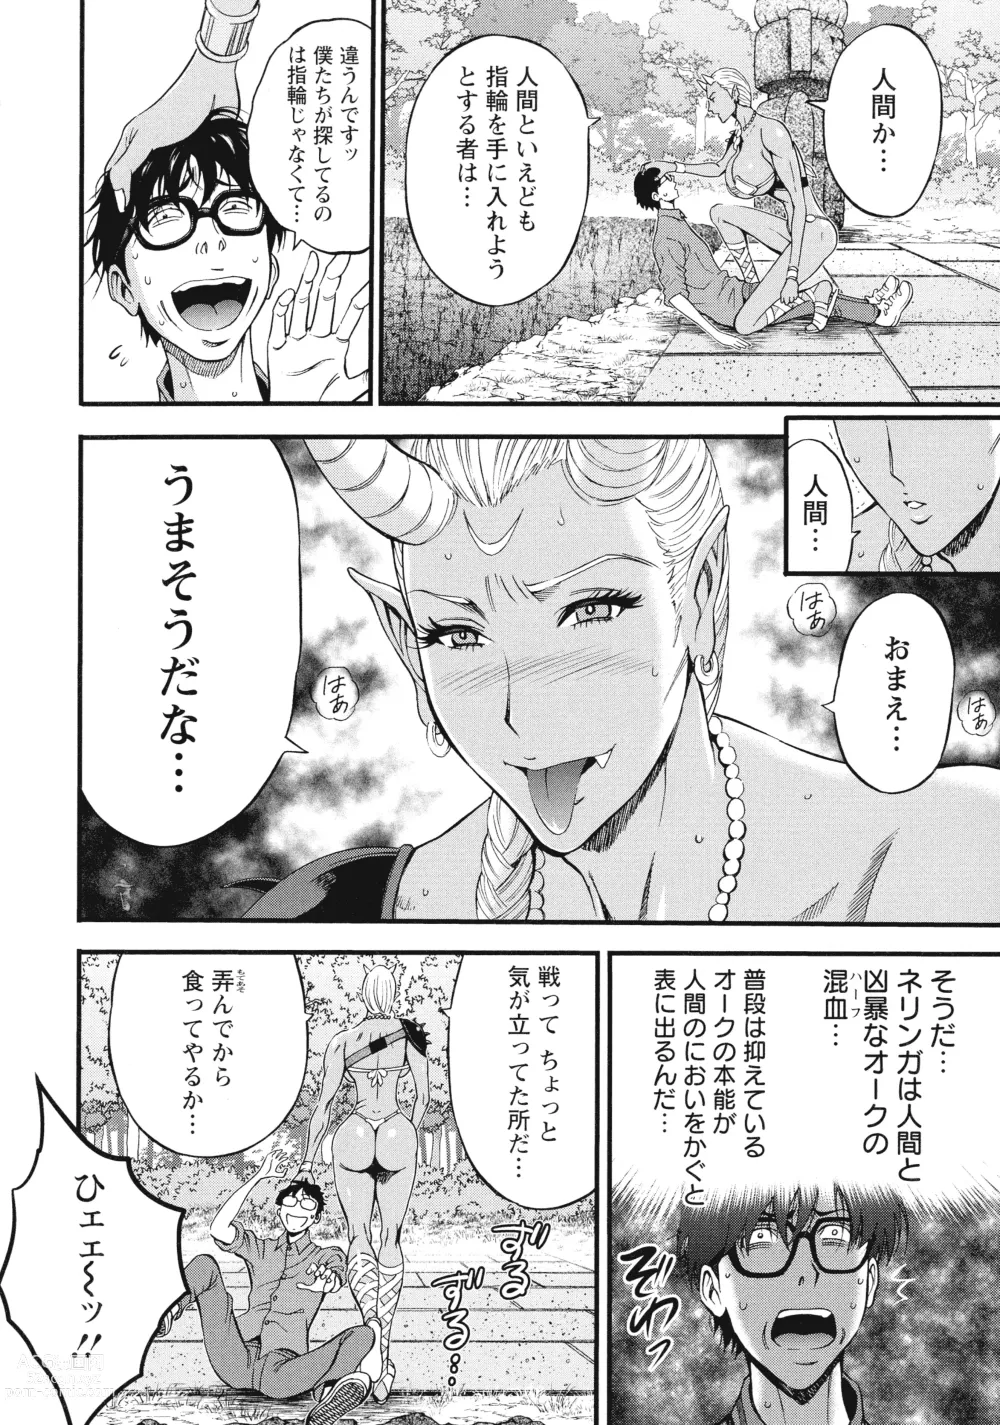 Page 31 of manga Watashi o Ikasete Haramasete... ~Anime Diver Z~ 2